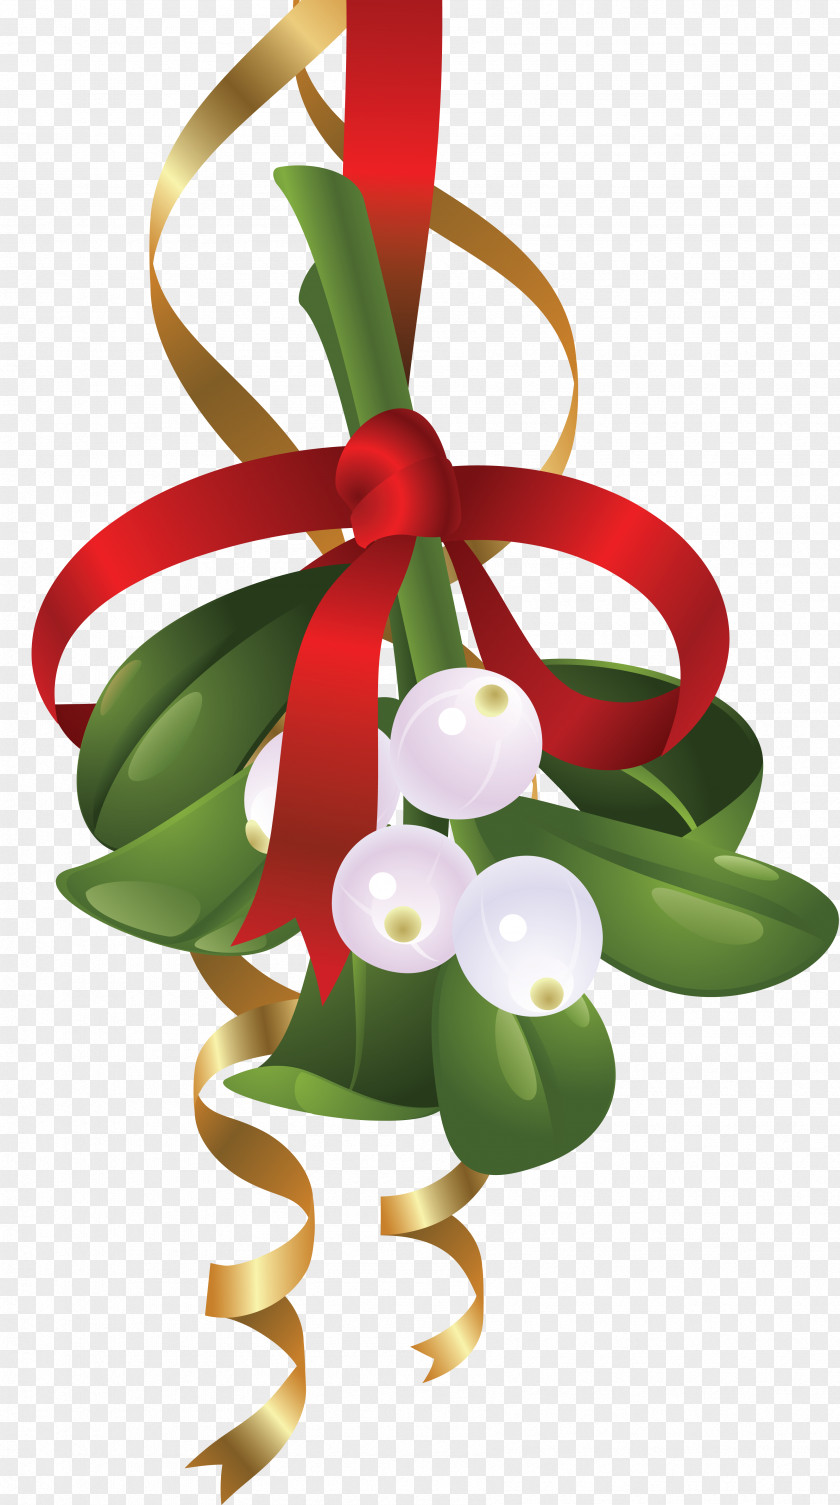 Canada Day Celebration Ribbon Christmas Mistletoe Clip Art Illustration Image PNG